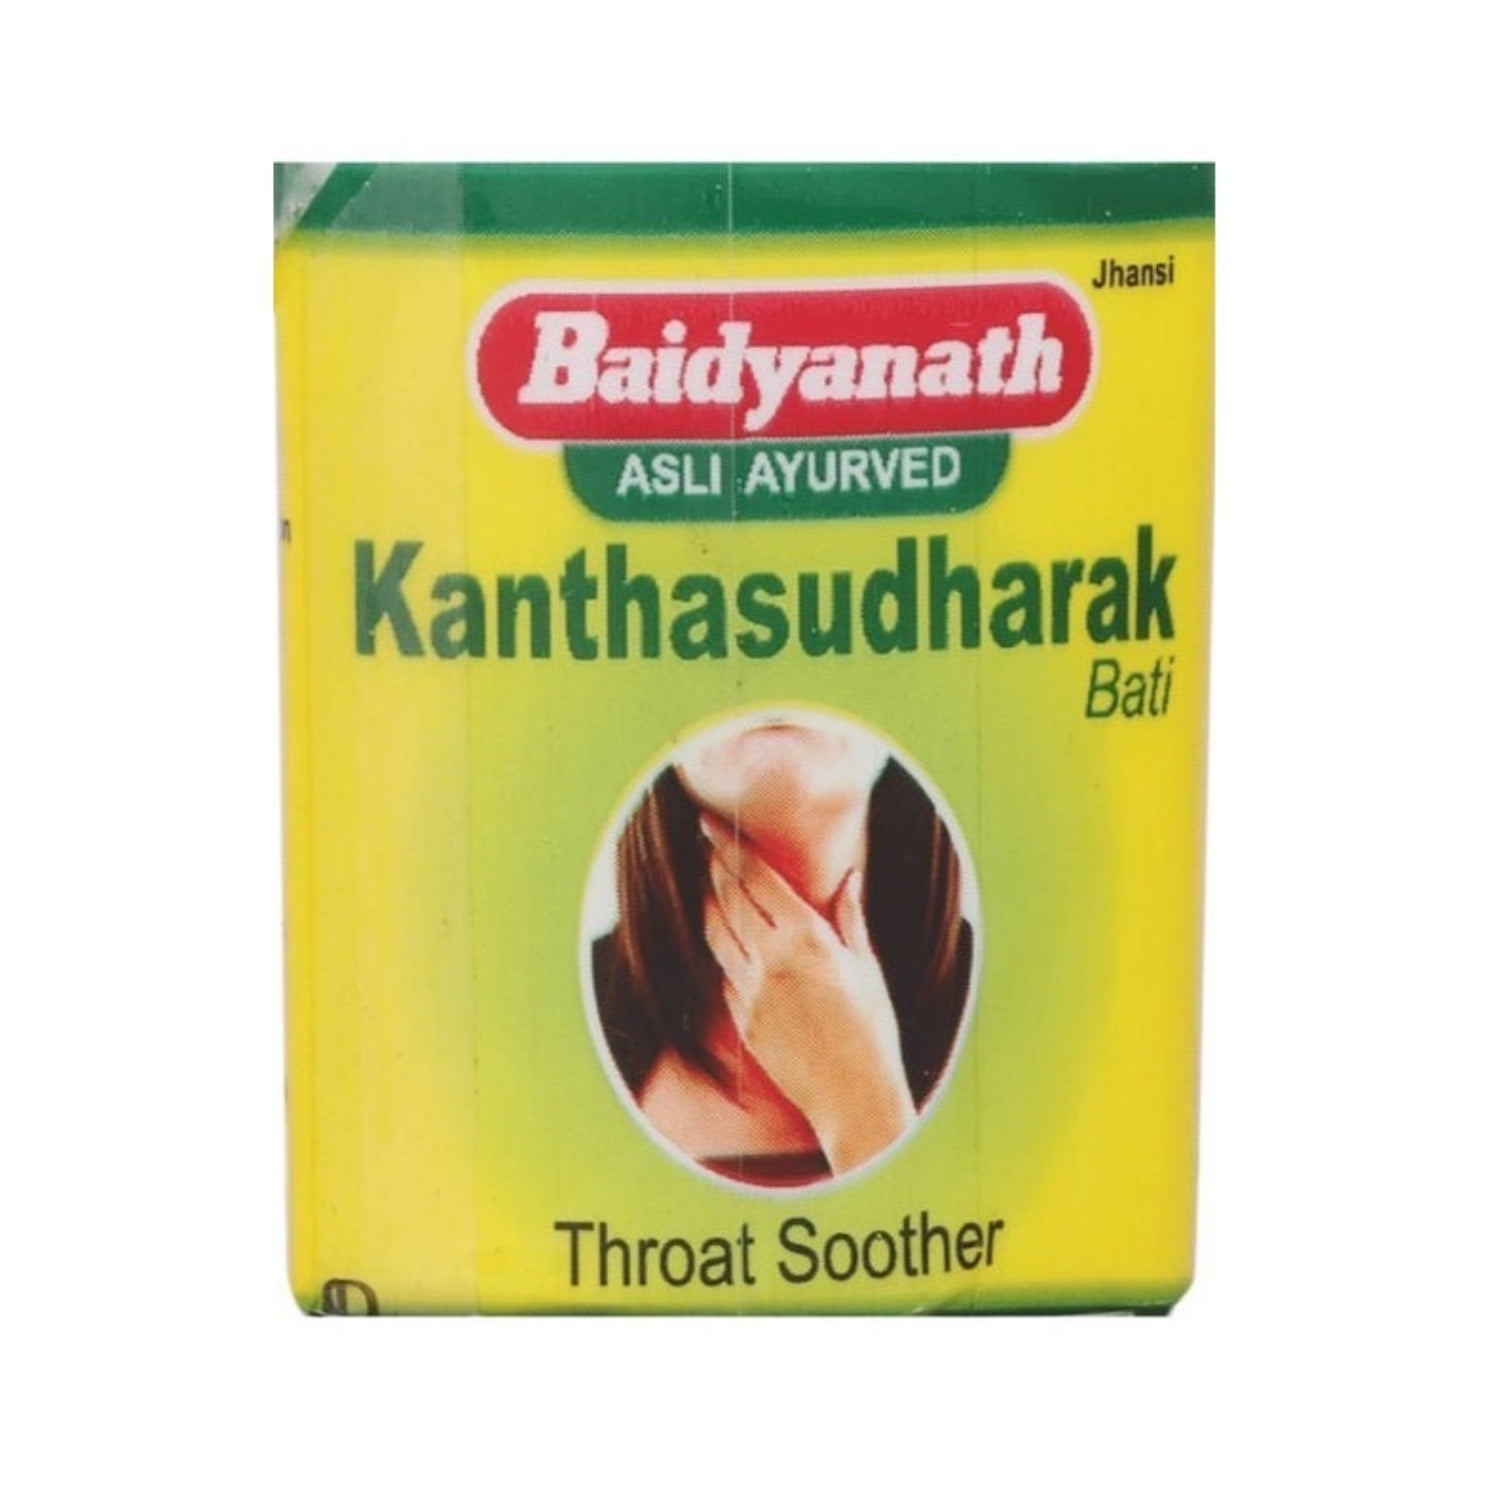 Baidyanath Ayurvedic Kanth Sudharak Bati (6g, Pack of 3) Tablets